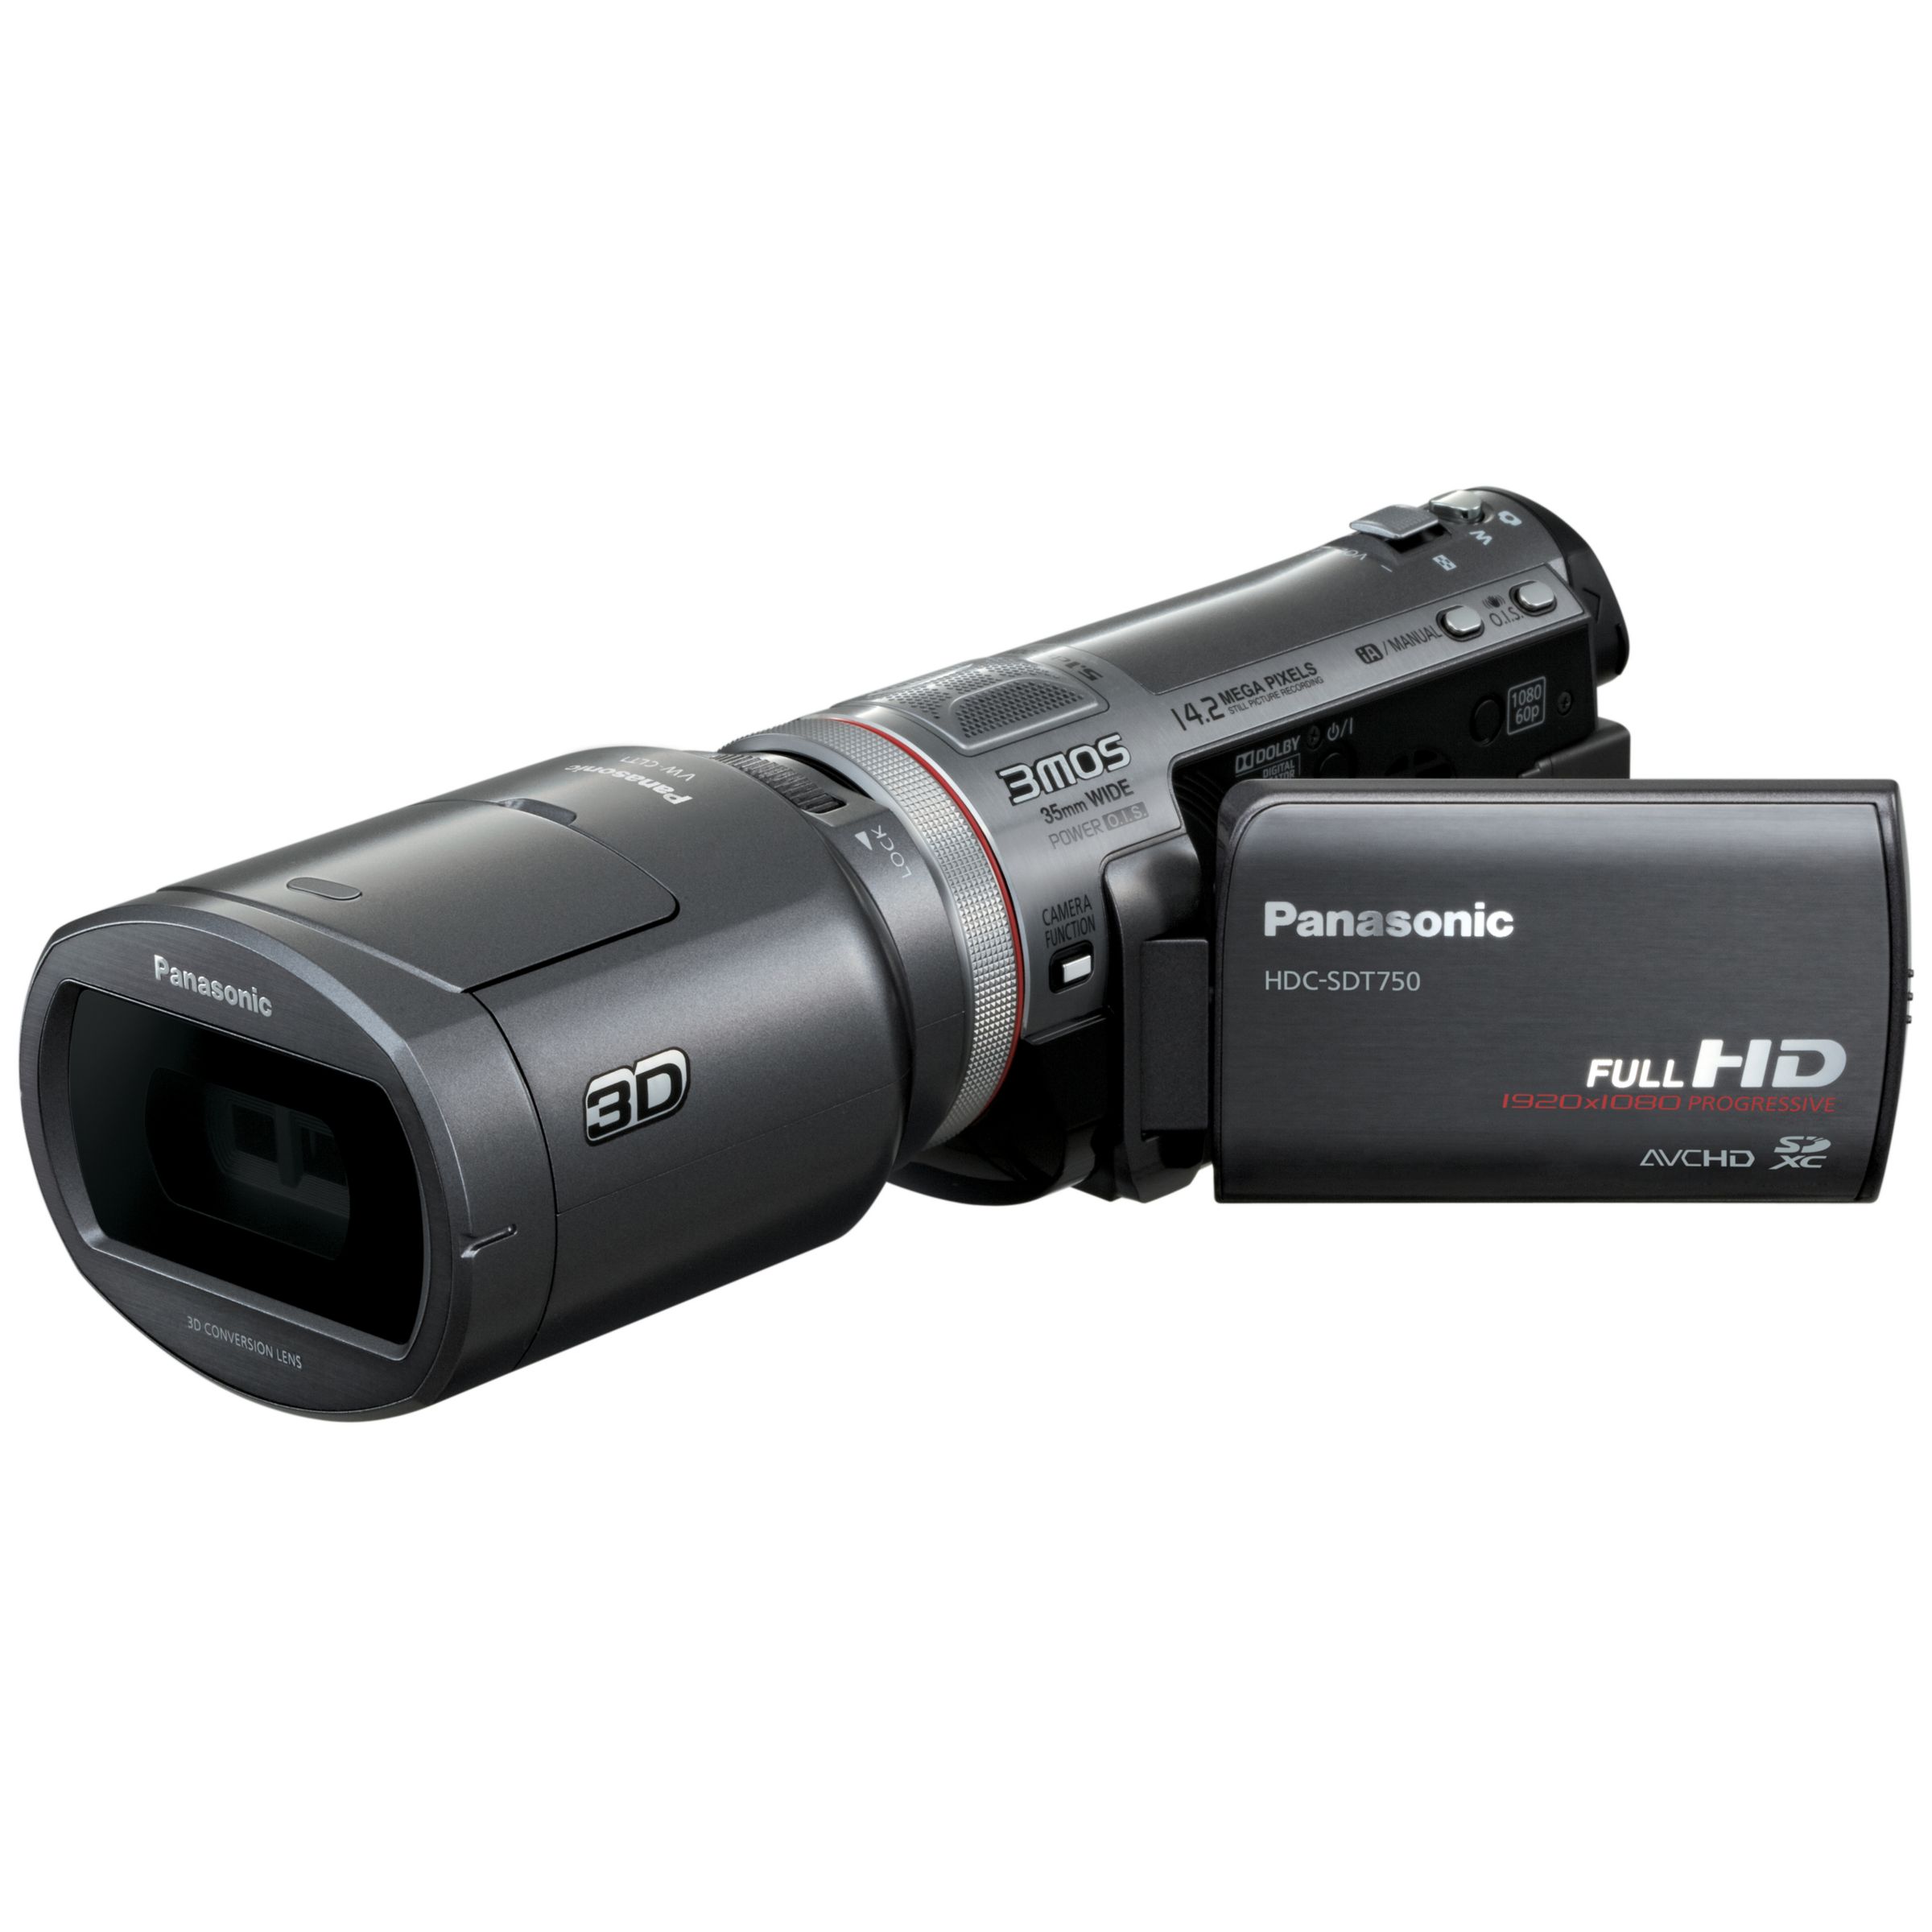 Panasonic HDC-SDT750 3D High Definition SD Camcorder, Black at John Lewis